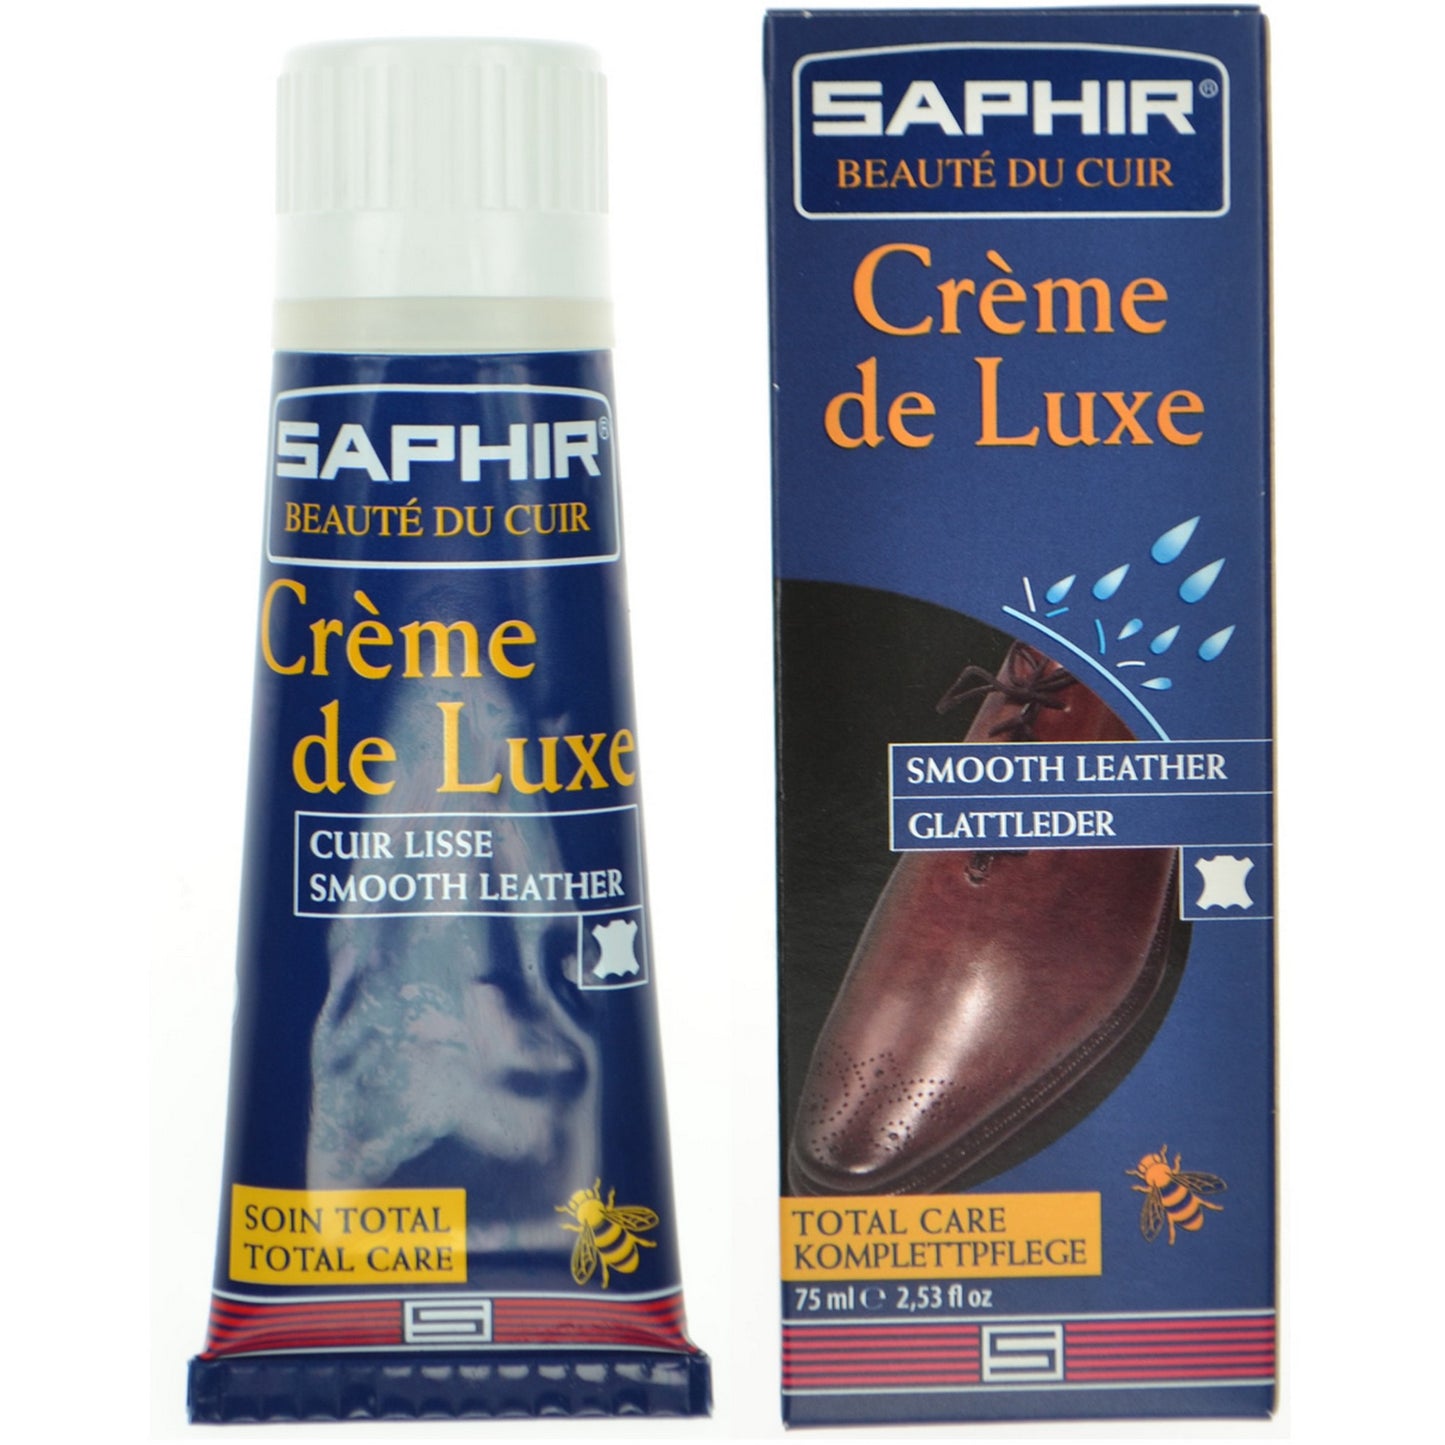 Saphir Creme de Luxe Shoe Polish with applicator - 75ml